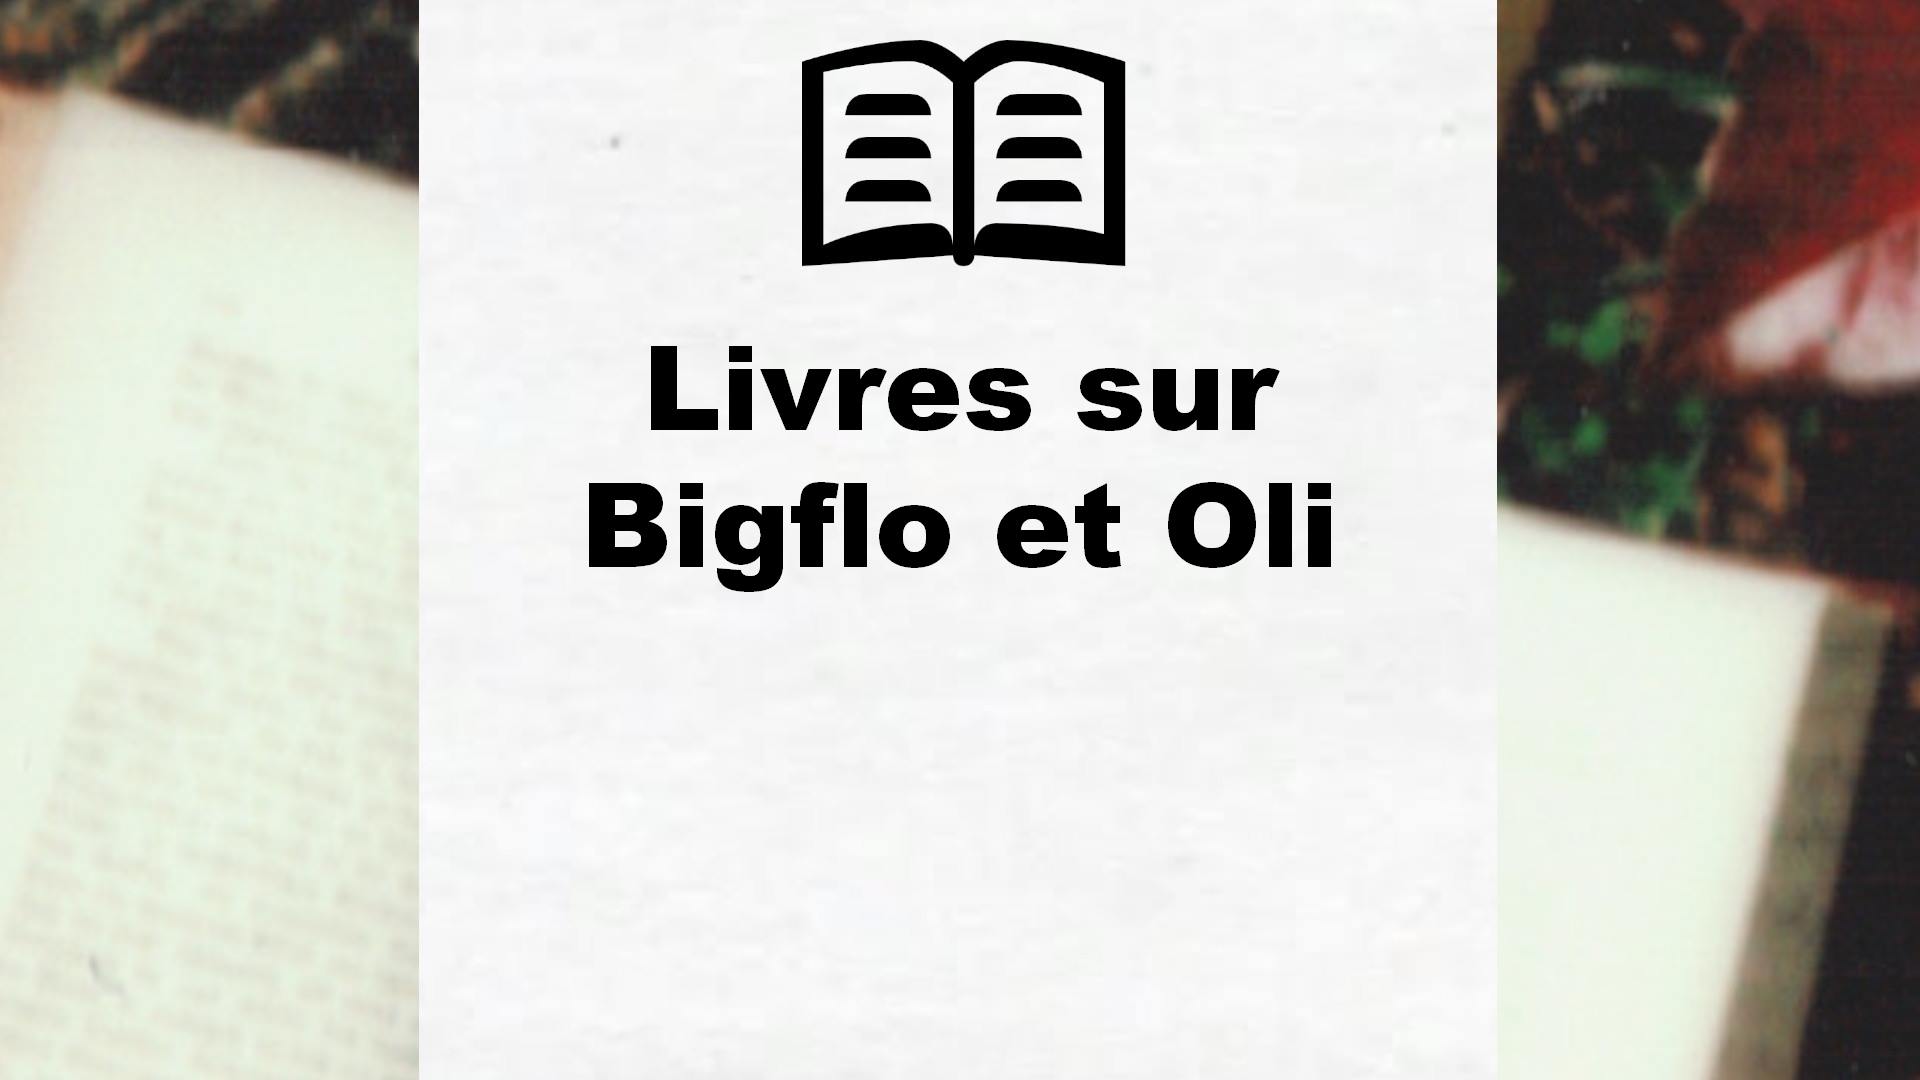 Livres sur Bigflo et Oli